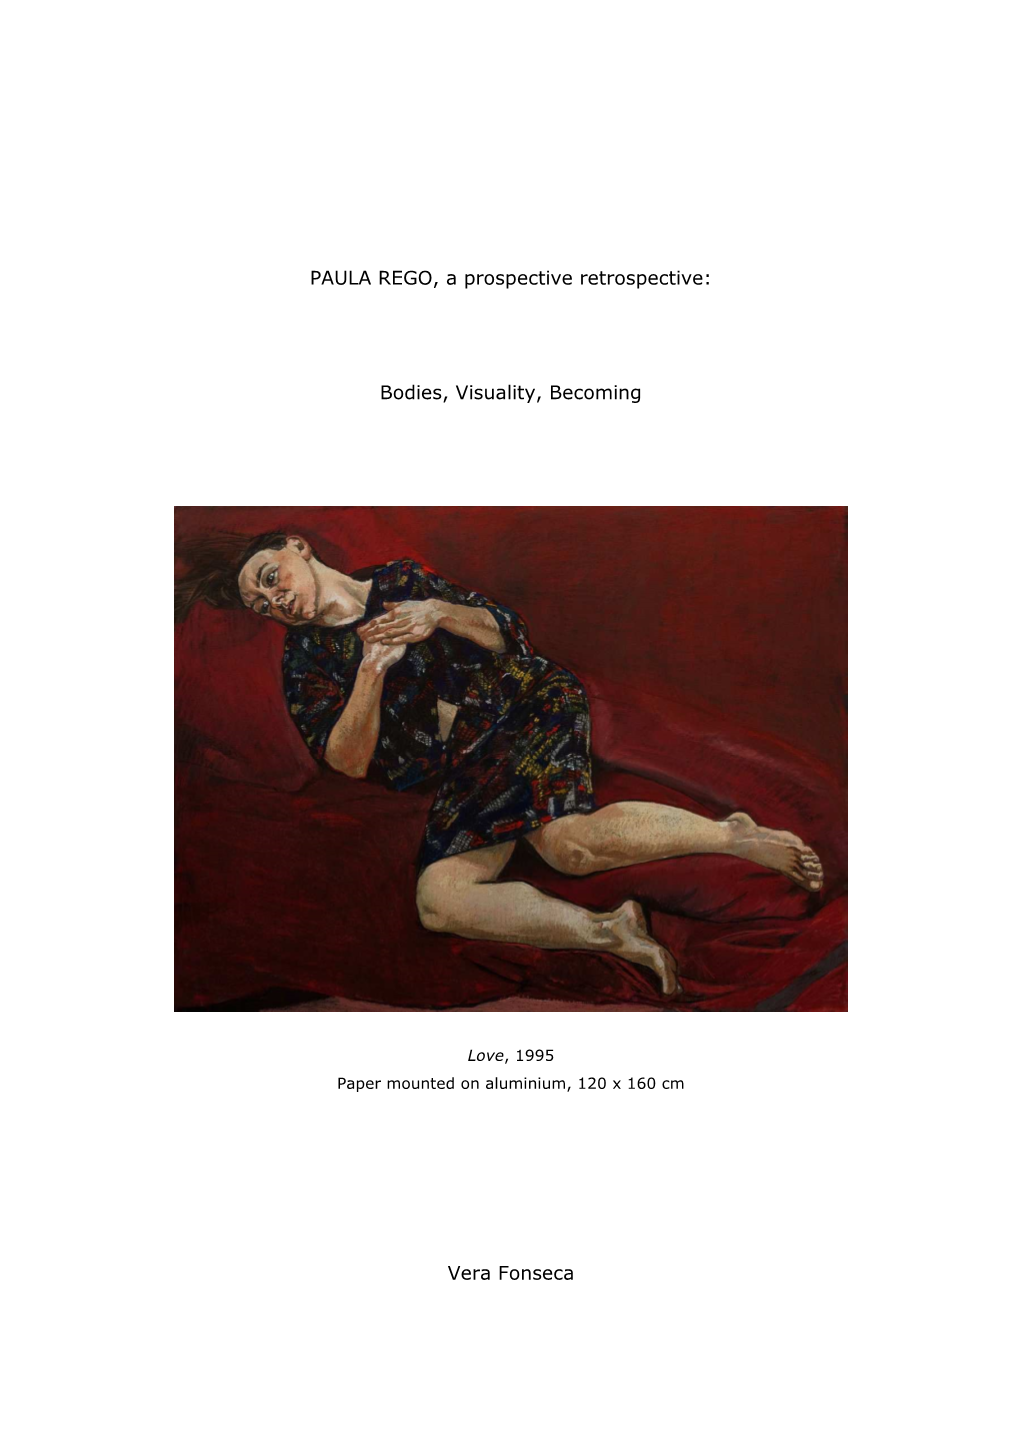 PAULA REGO, a Prospective Retrospective